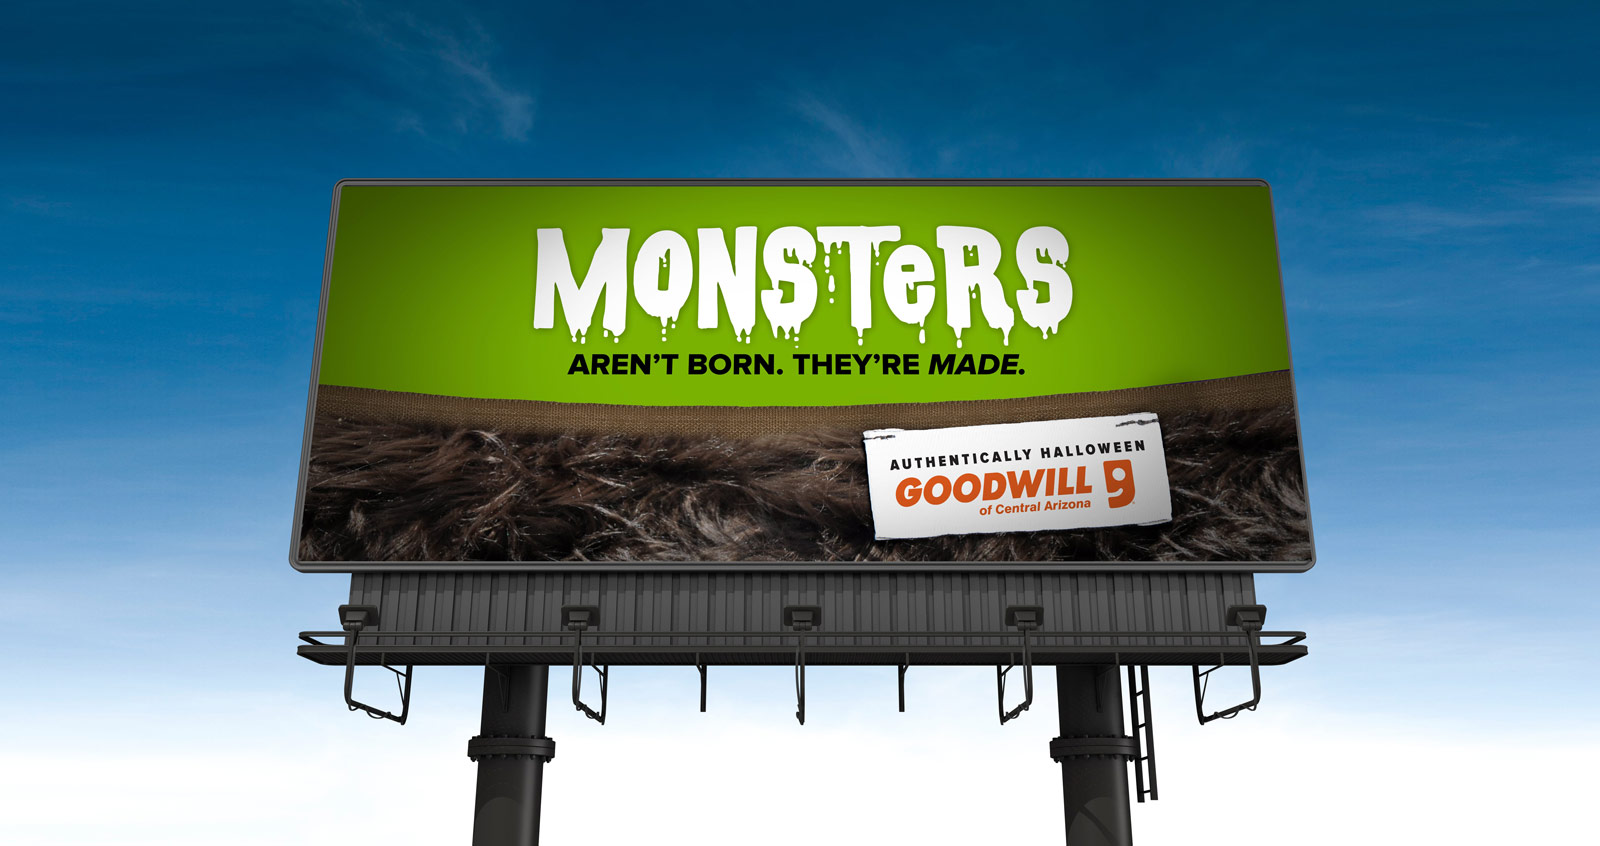 Goodwill billboard - Halloween monsters